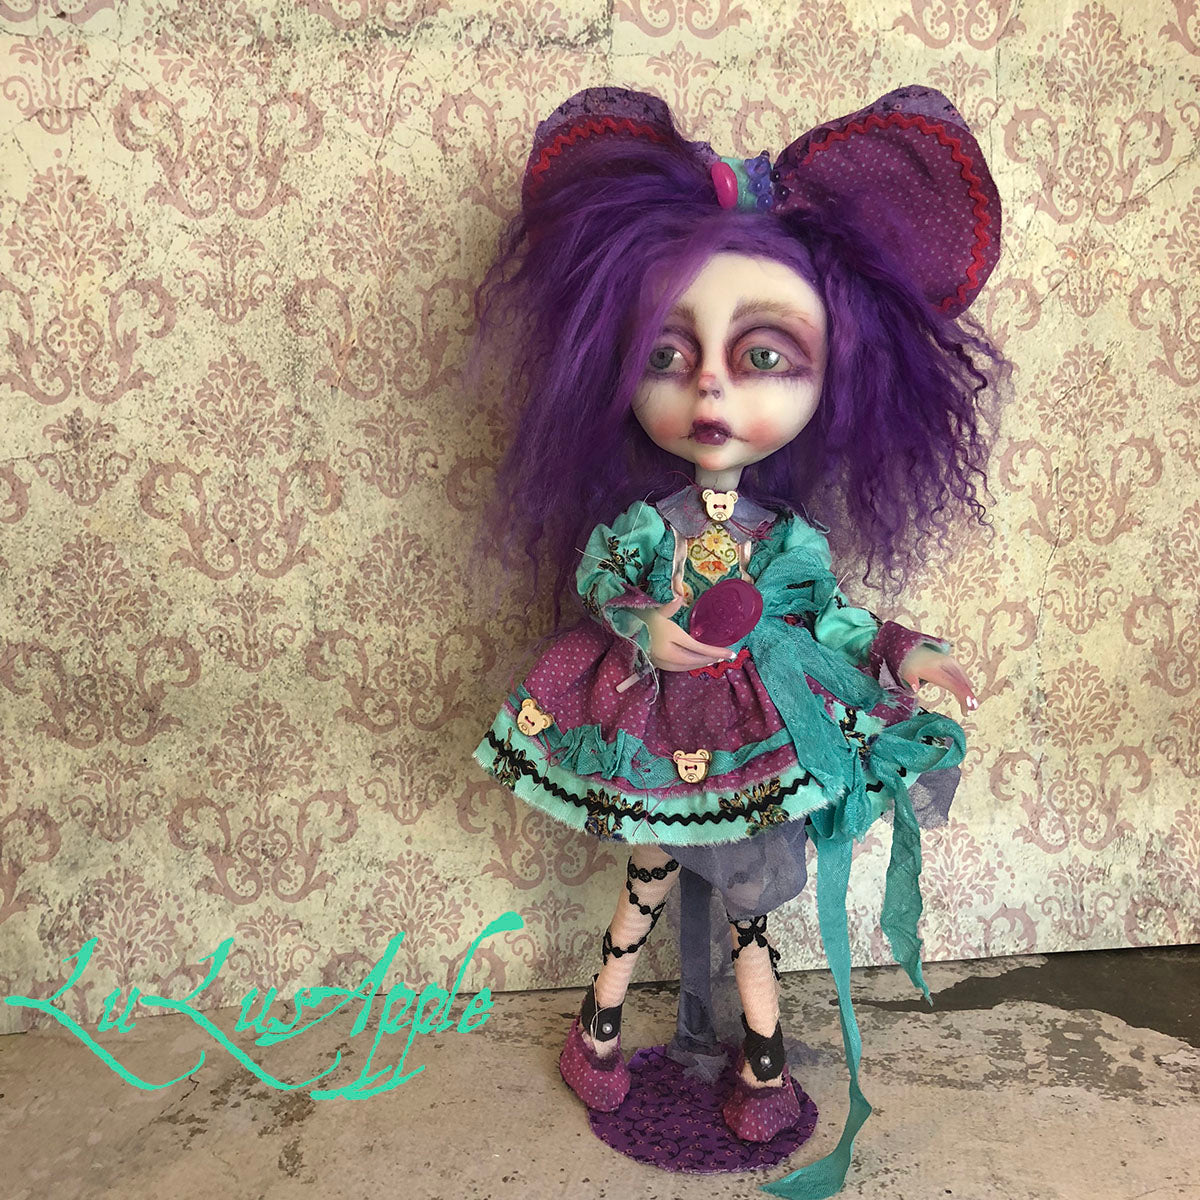 Daphne Candy Girl Gothic Lolita sadness OOAK LuLusApple Art Doll